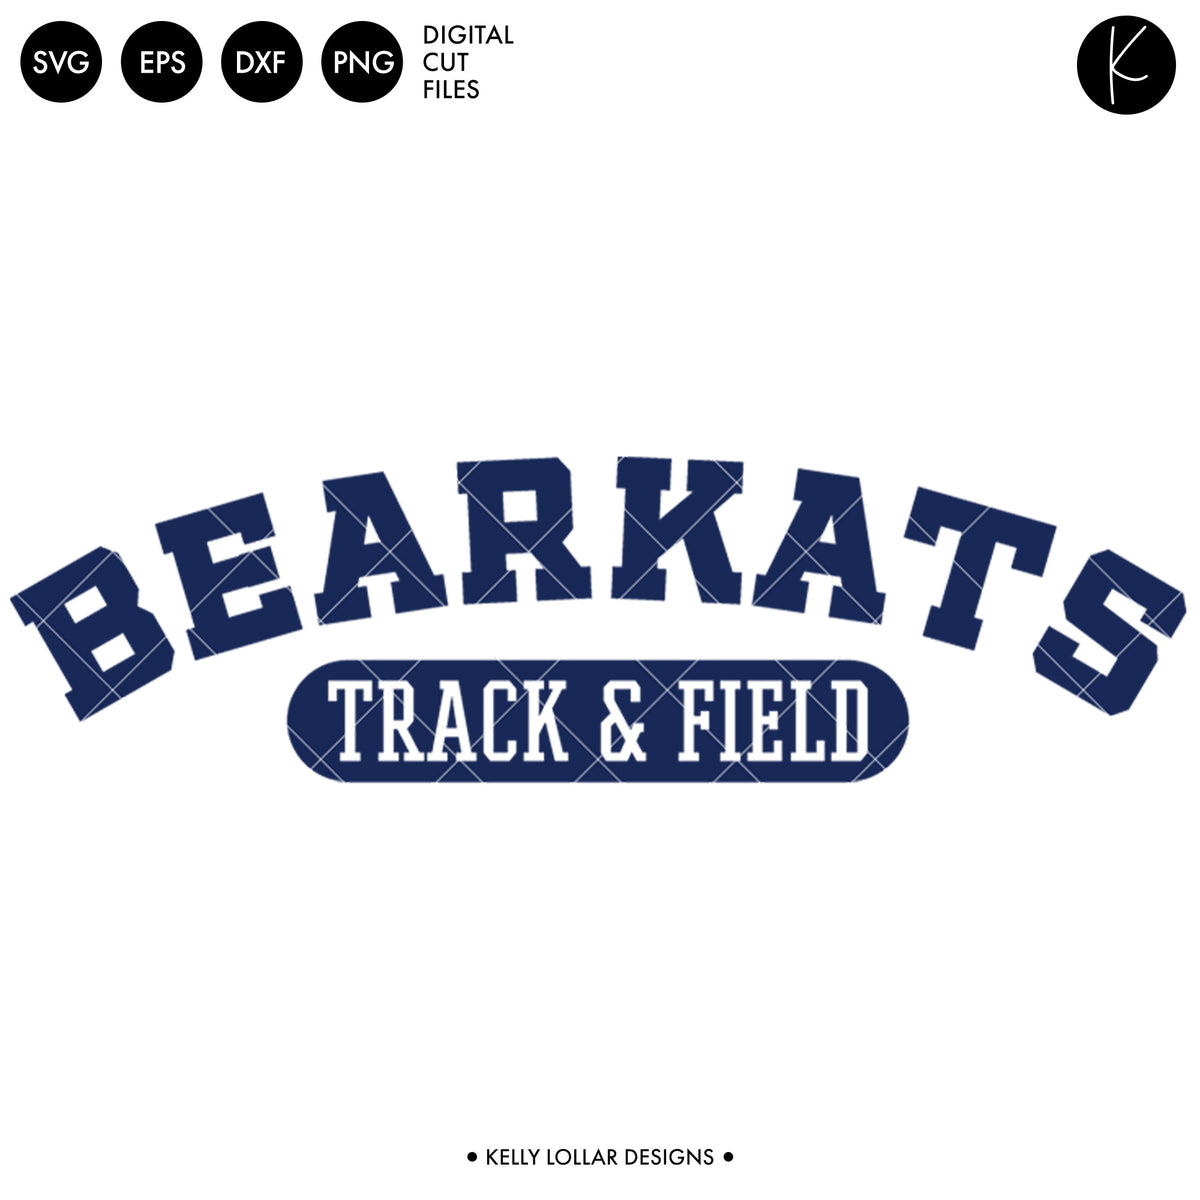 Bearkats Track &amp; Field Bundle | SVG DXF EPS PNG Cut Files